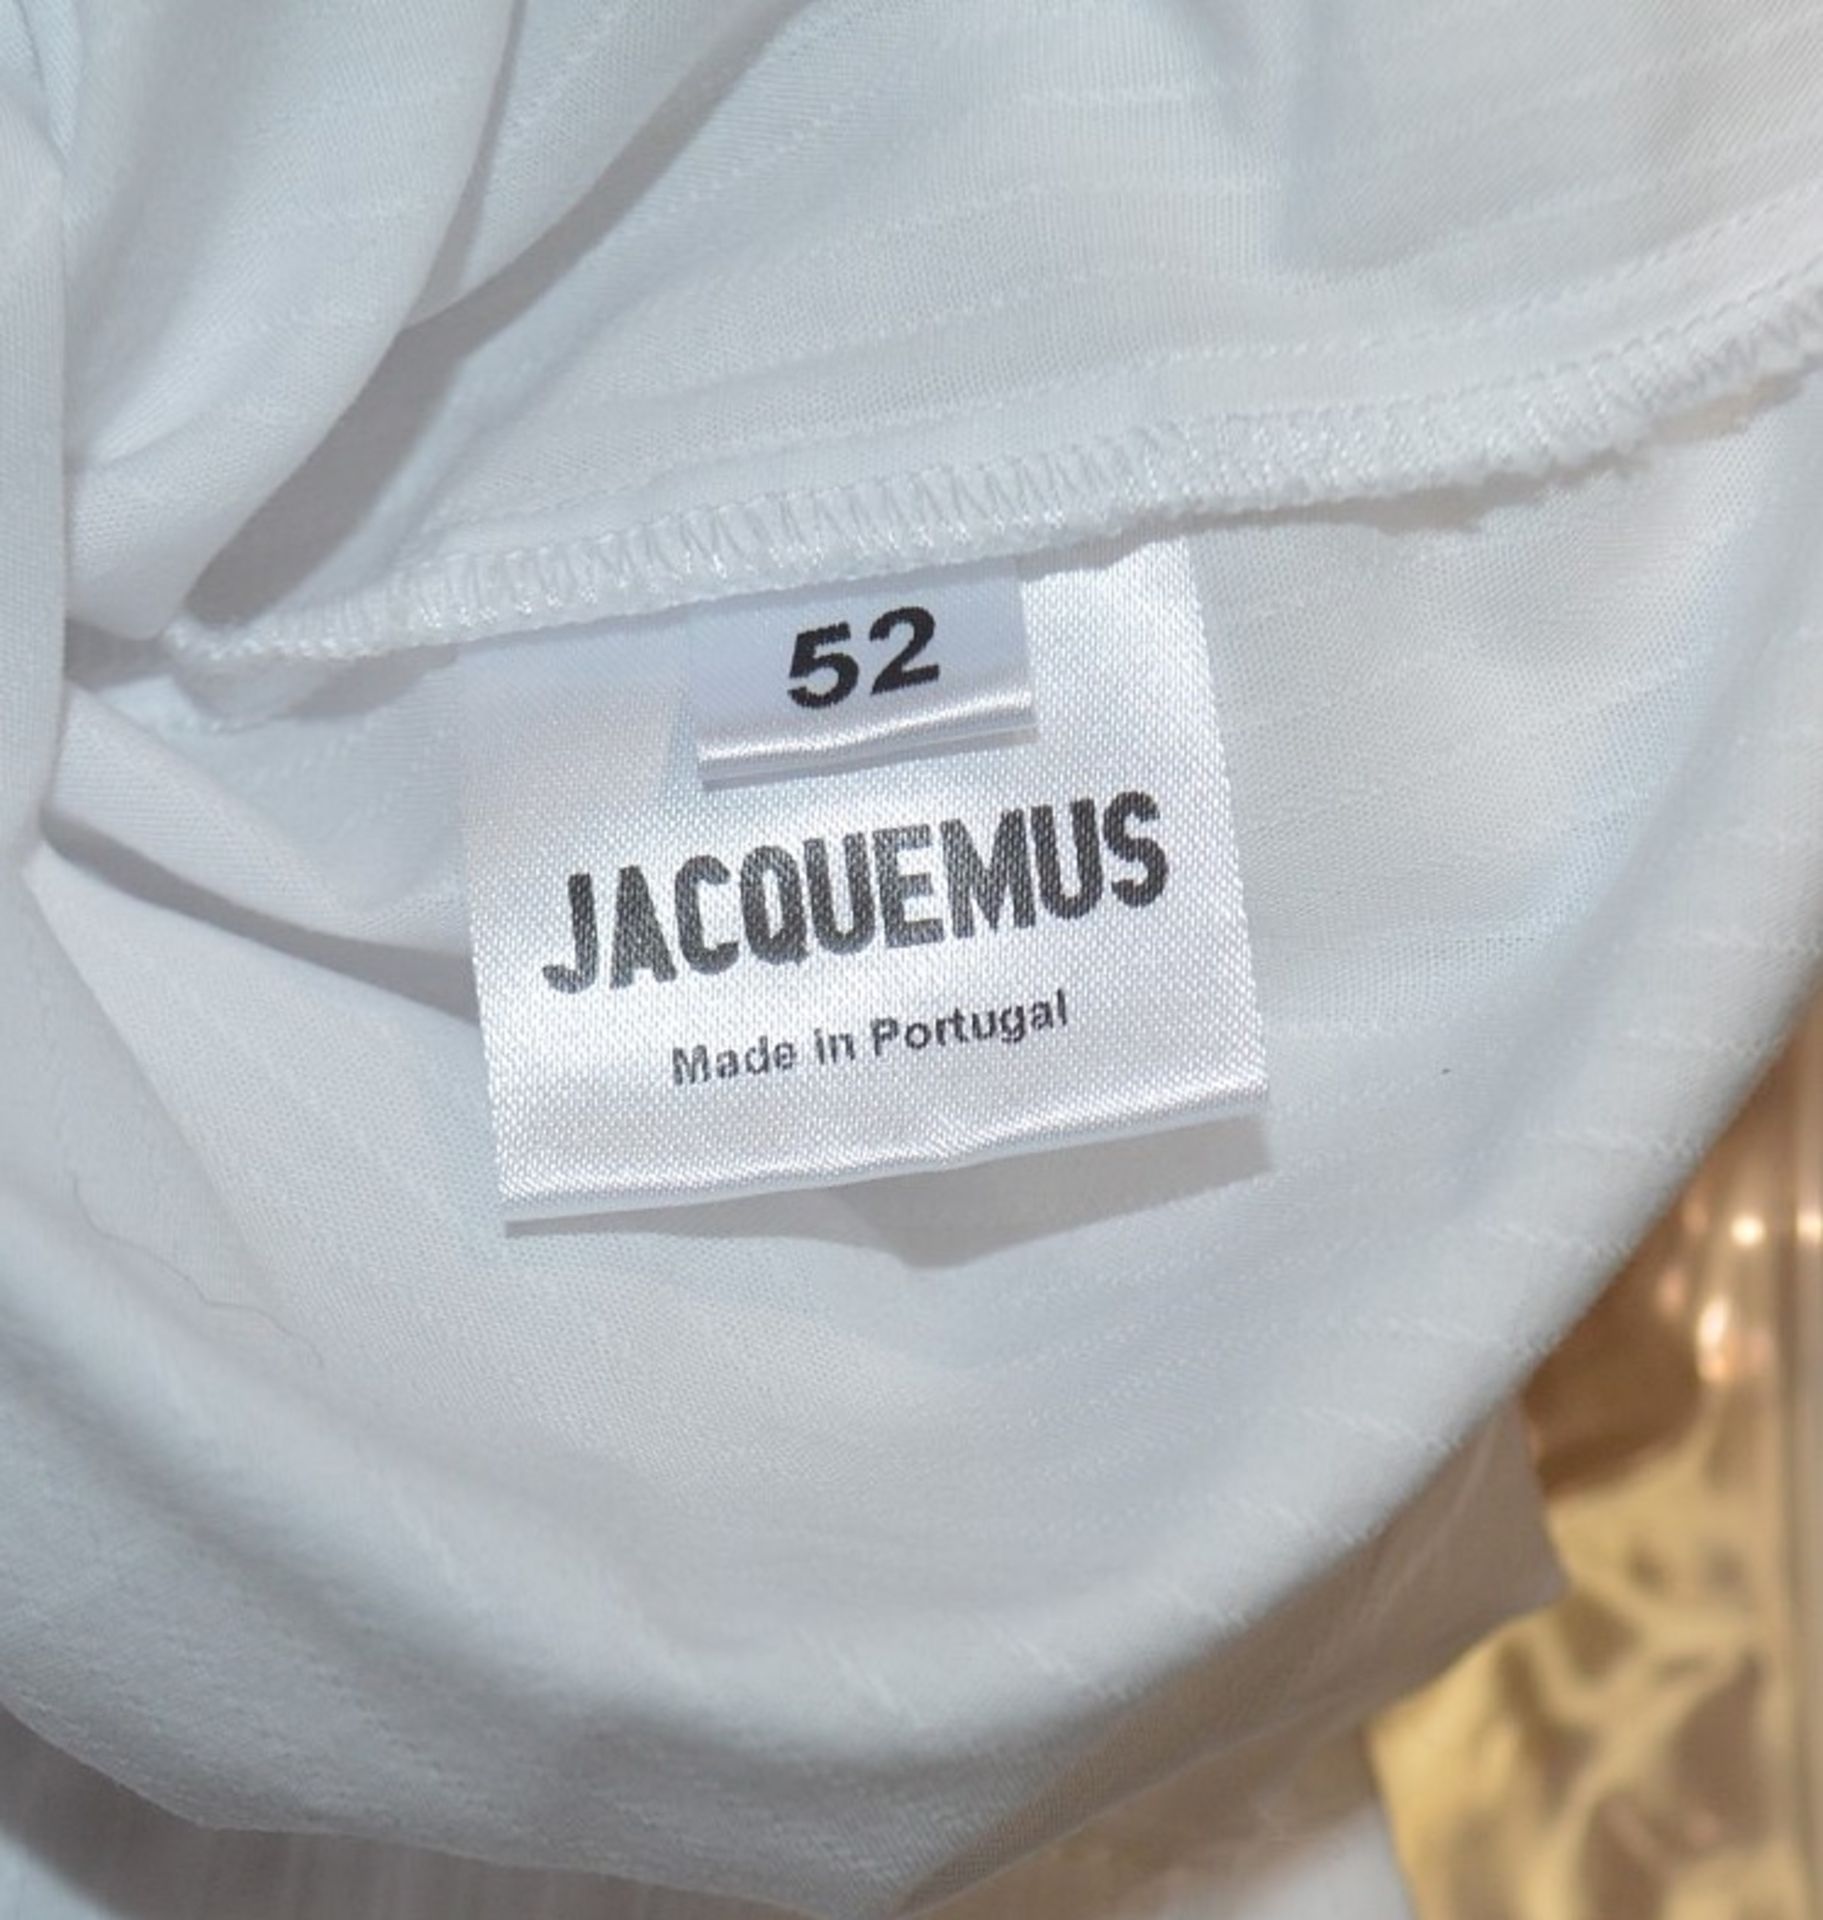 1 x Men's Genuine Jaquemus Designer Short Sleeve Shirt In White - Size: LARGE - RRP £250.00 - Image 4 of 7